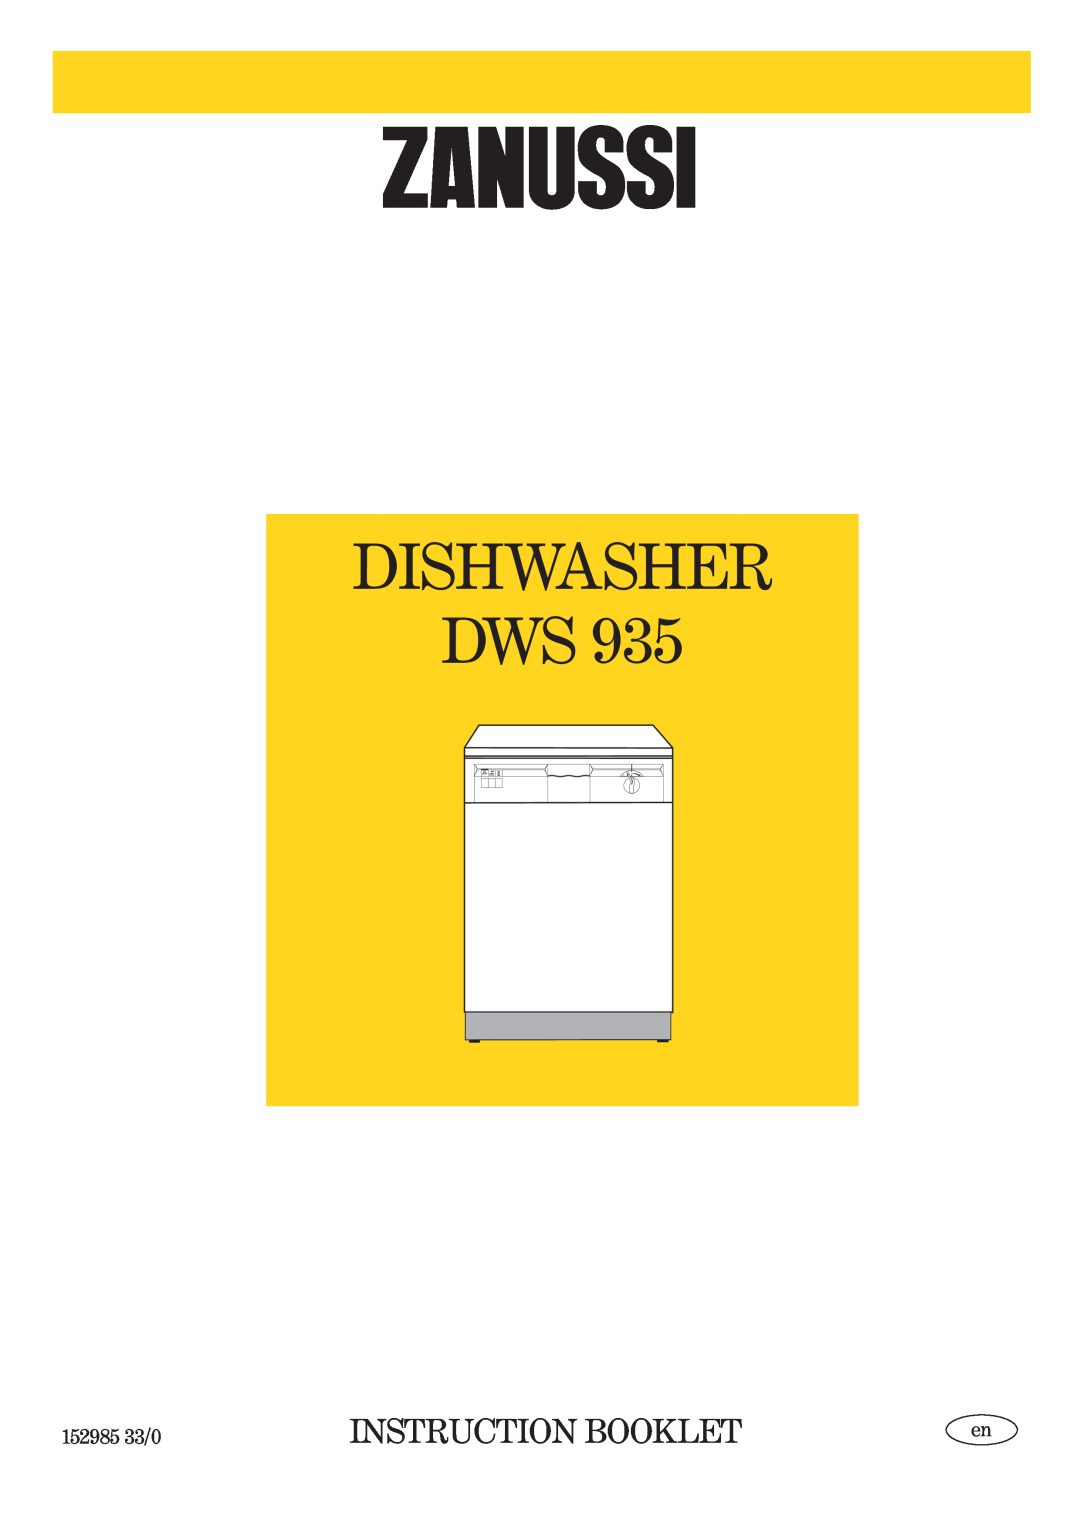 Zanussi DWS 935 manual Dishwasher Dws, Instruction Booklet, 152985 33/0 